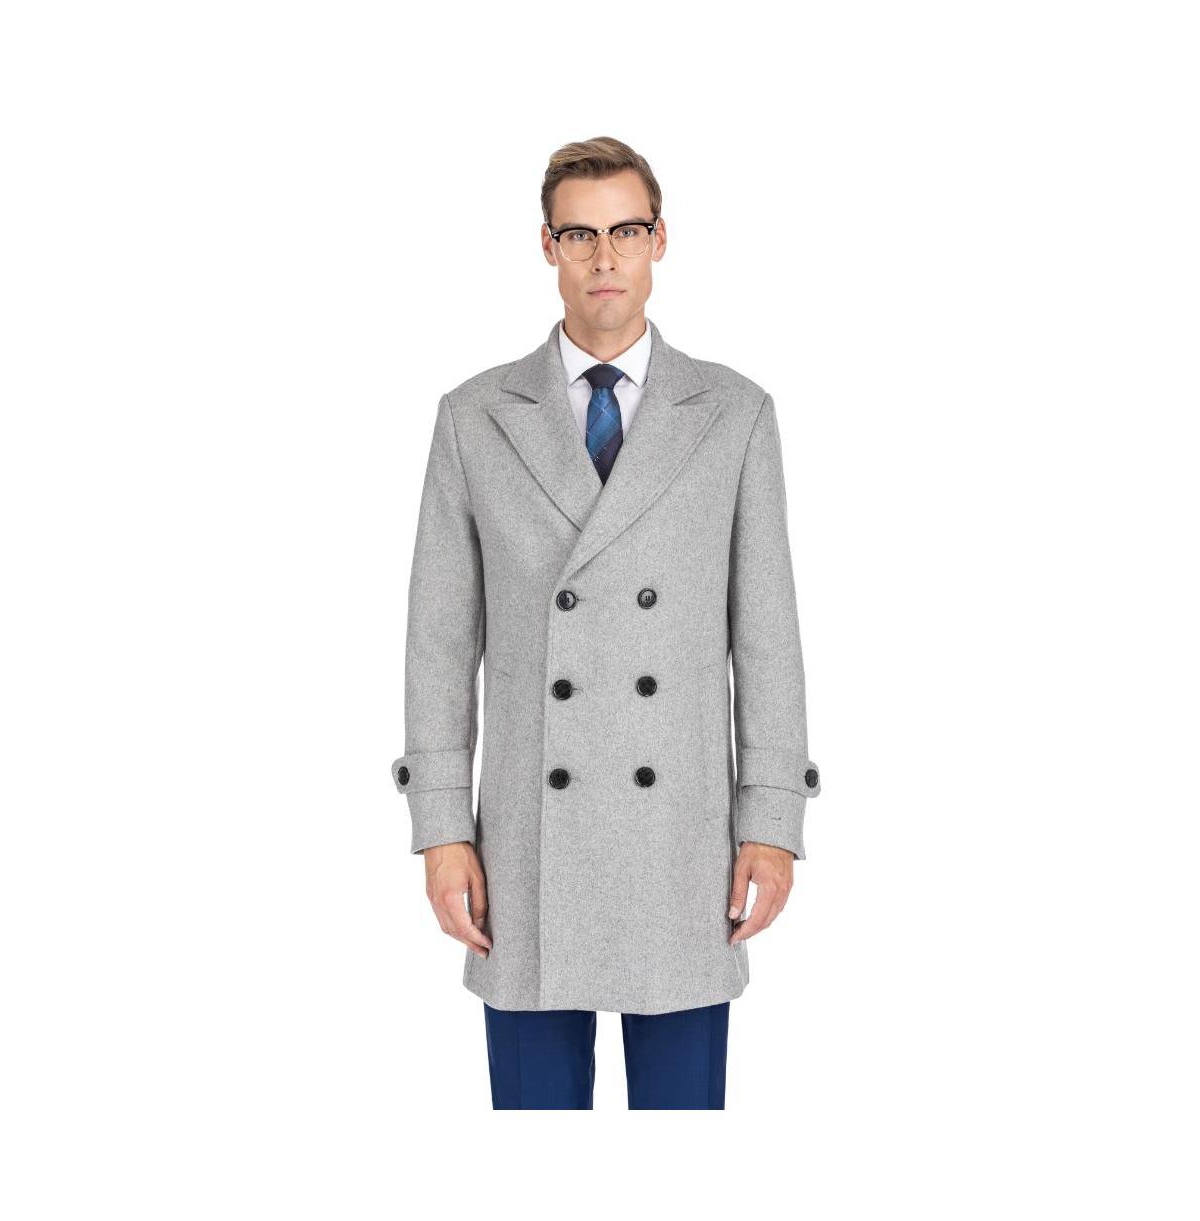 Brave man Men's Double Breasted Pea Coat Wool Blend Dress Pea coat - Light grey